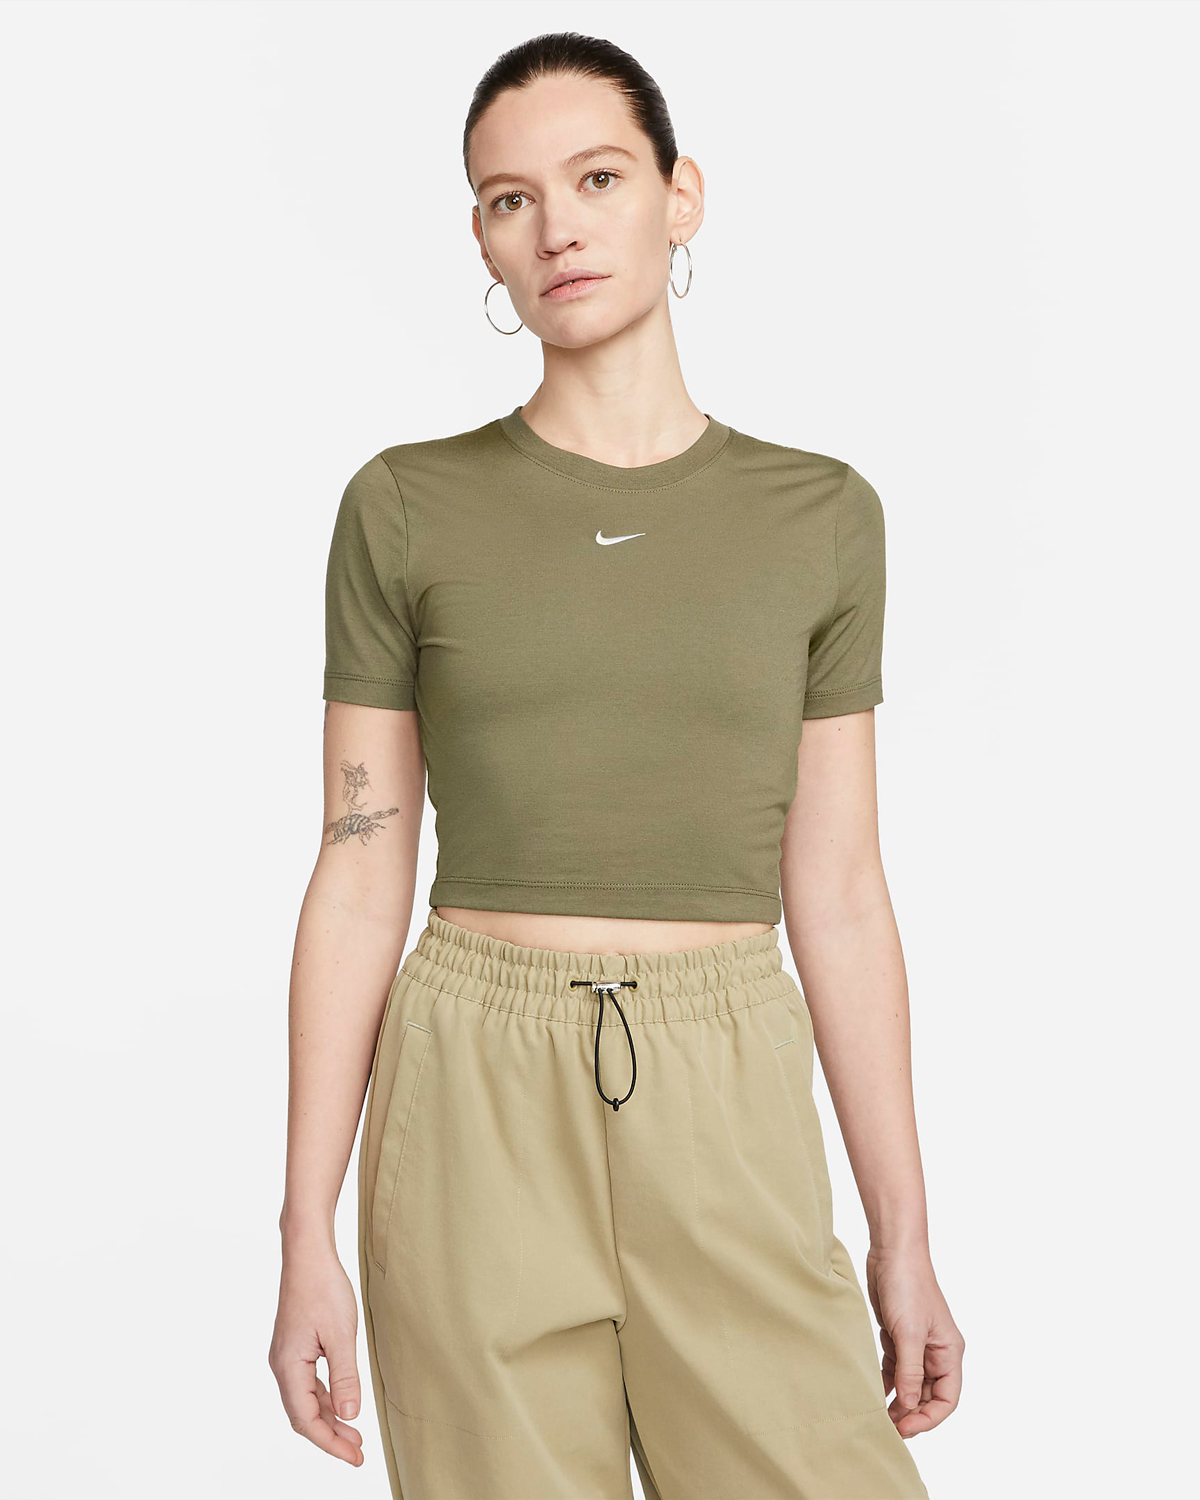 Nike-Sportswear-Womens-Crop-T-Shirt-Medium-Olive